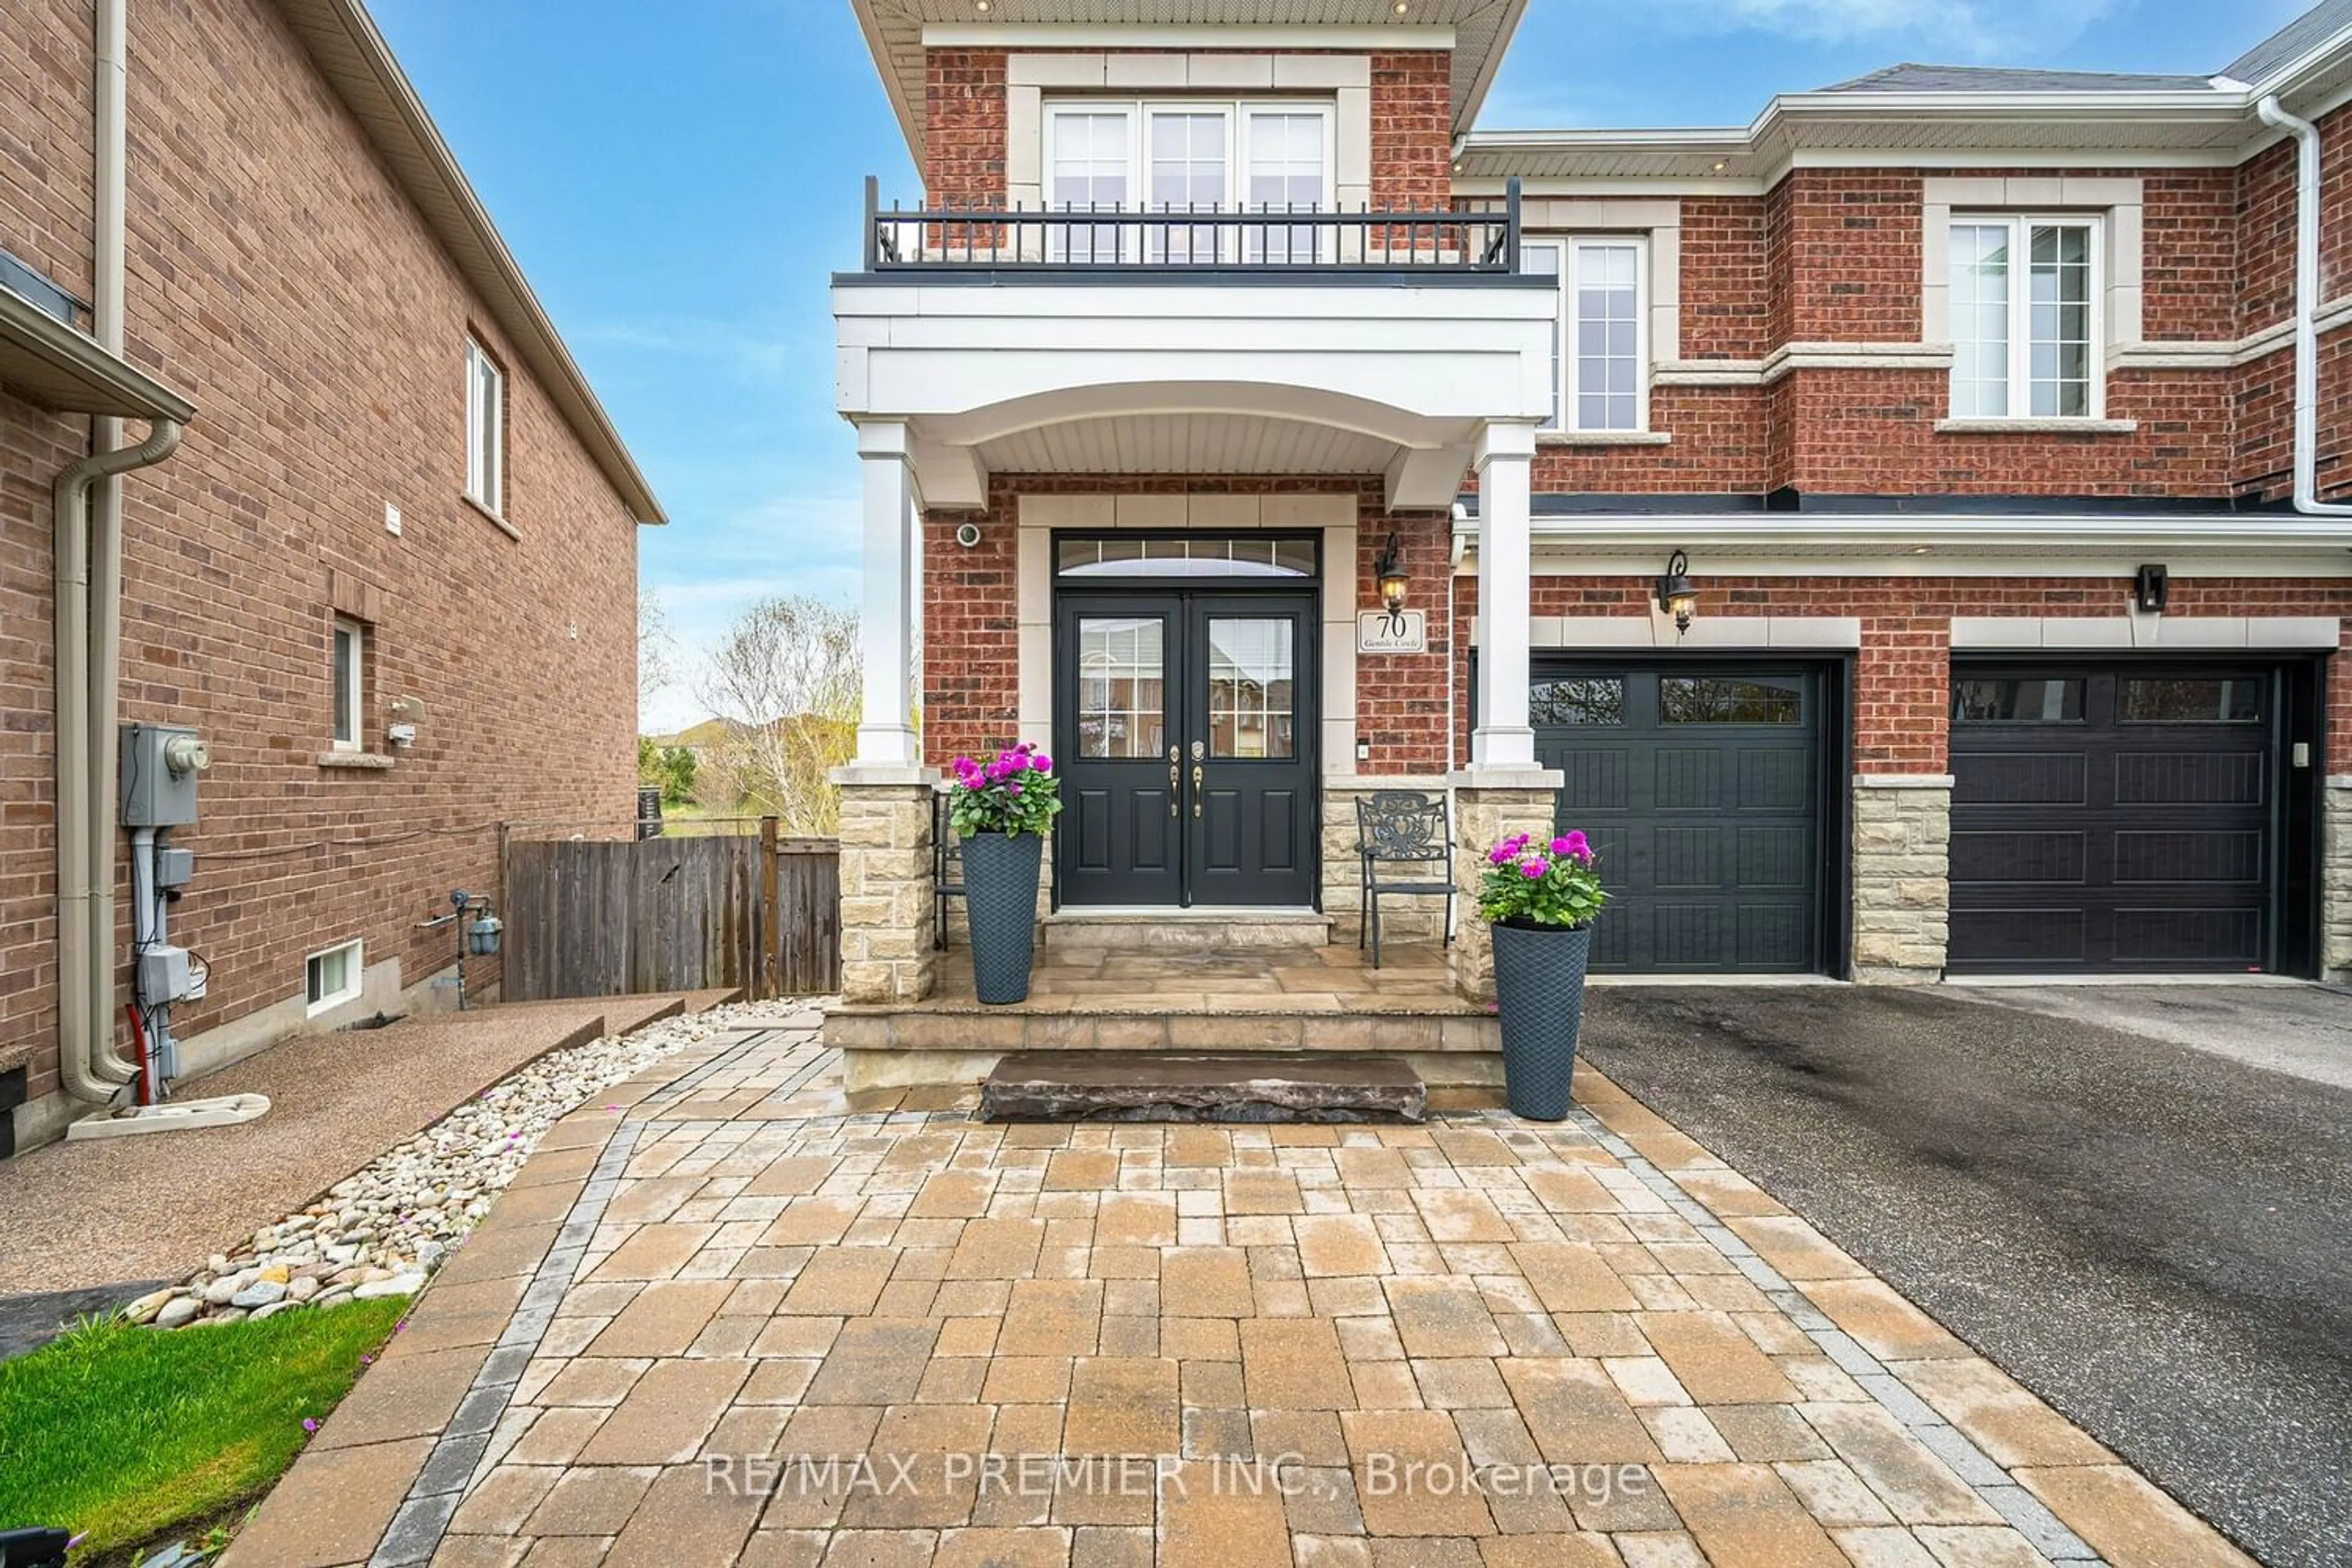 Home with brick exterior material for 70 Gentile Circ, Vaughan Ontario L4H 3N4